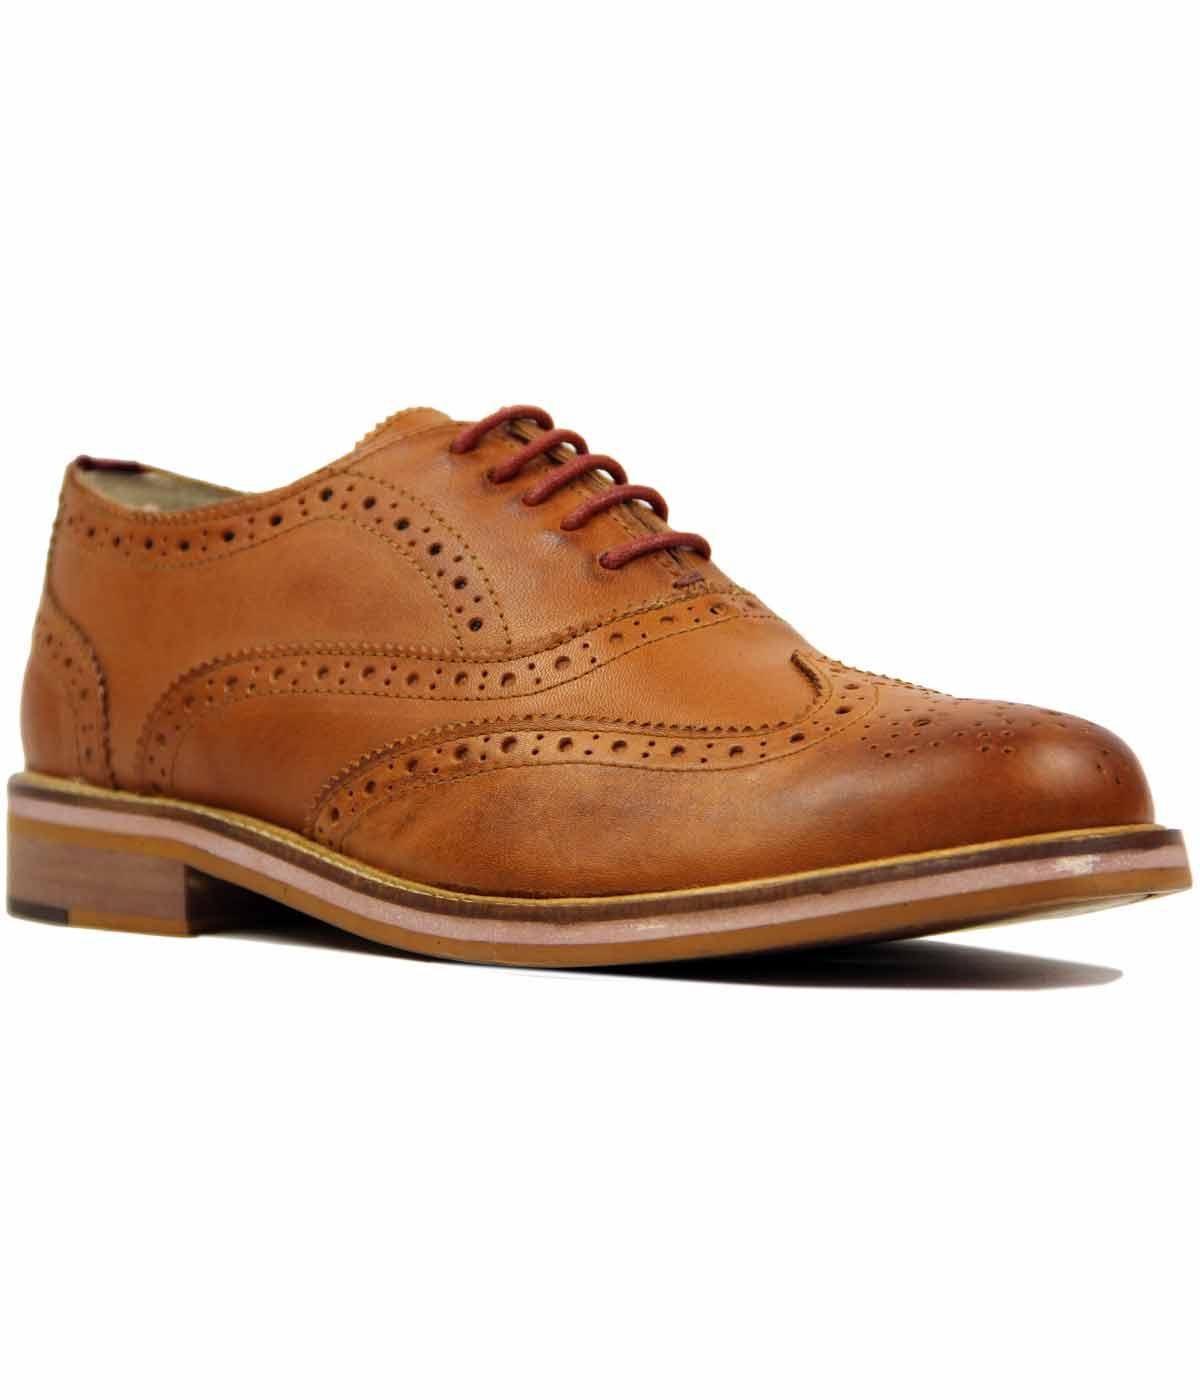 Offense Sage most BEN SHERMAN Deon Retro 60s Mod Oxford Brogue Shoes in Cognac